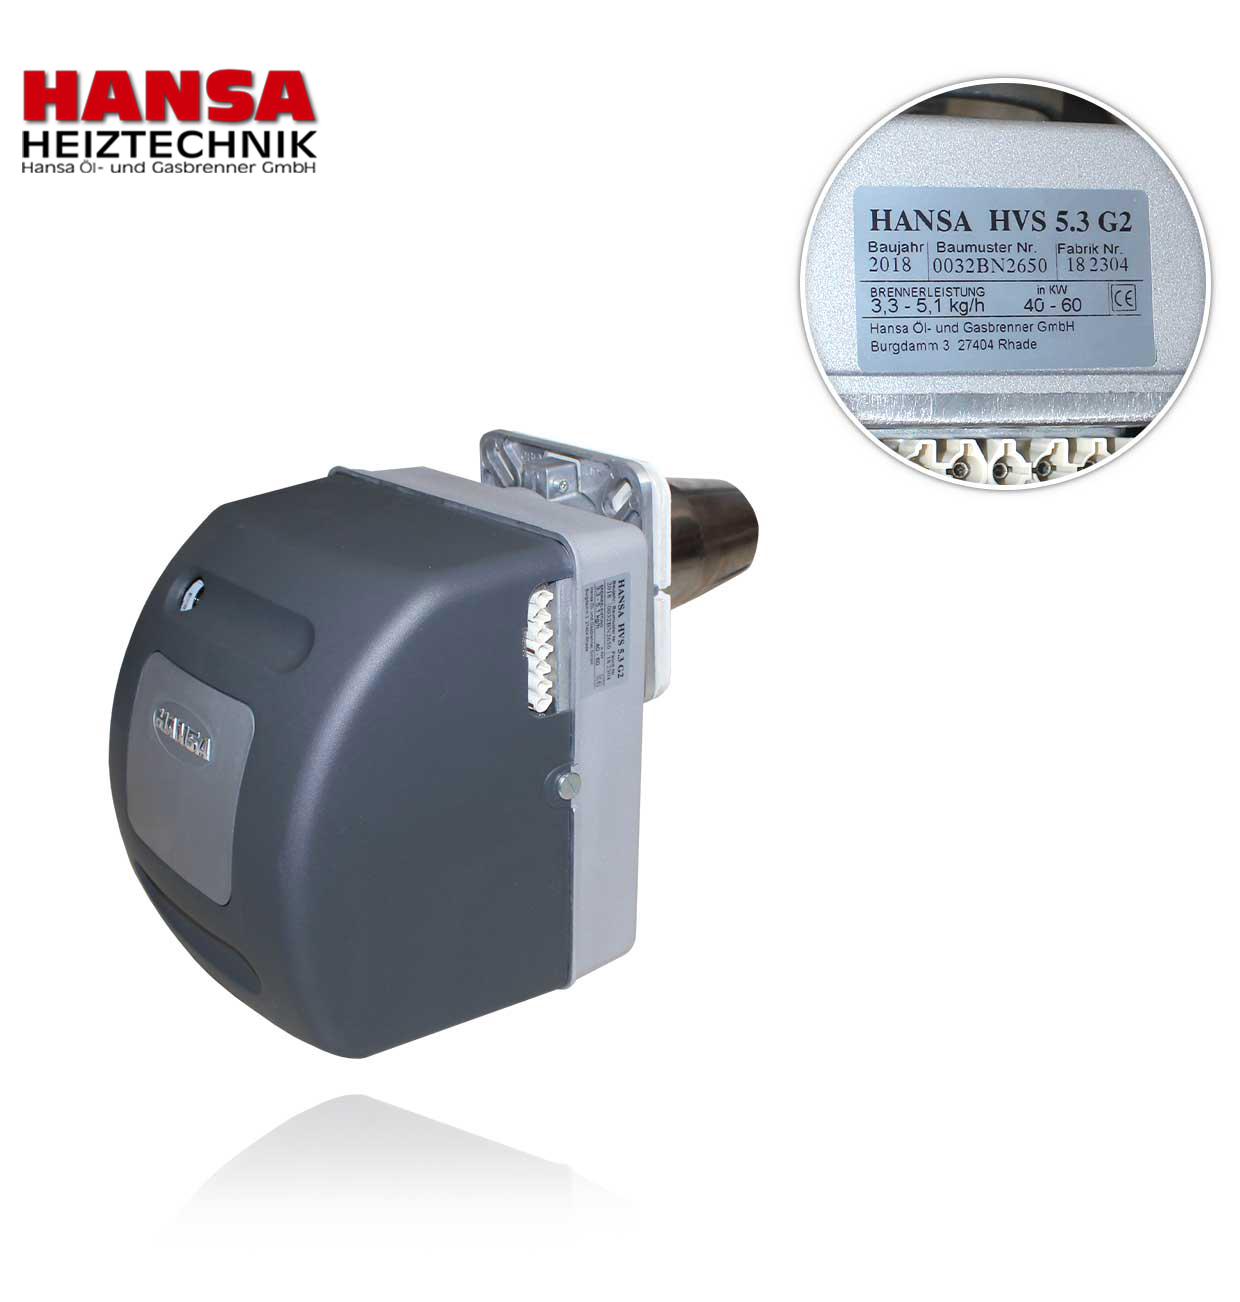 HVS 5.3 G2 40-60kw with HANSA preheater